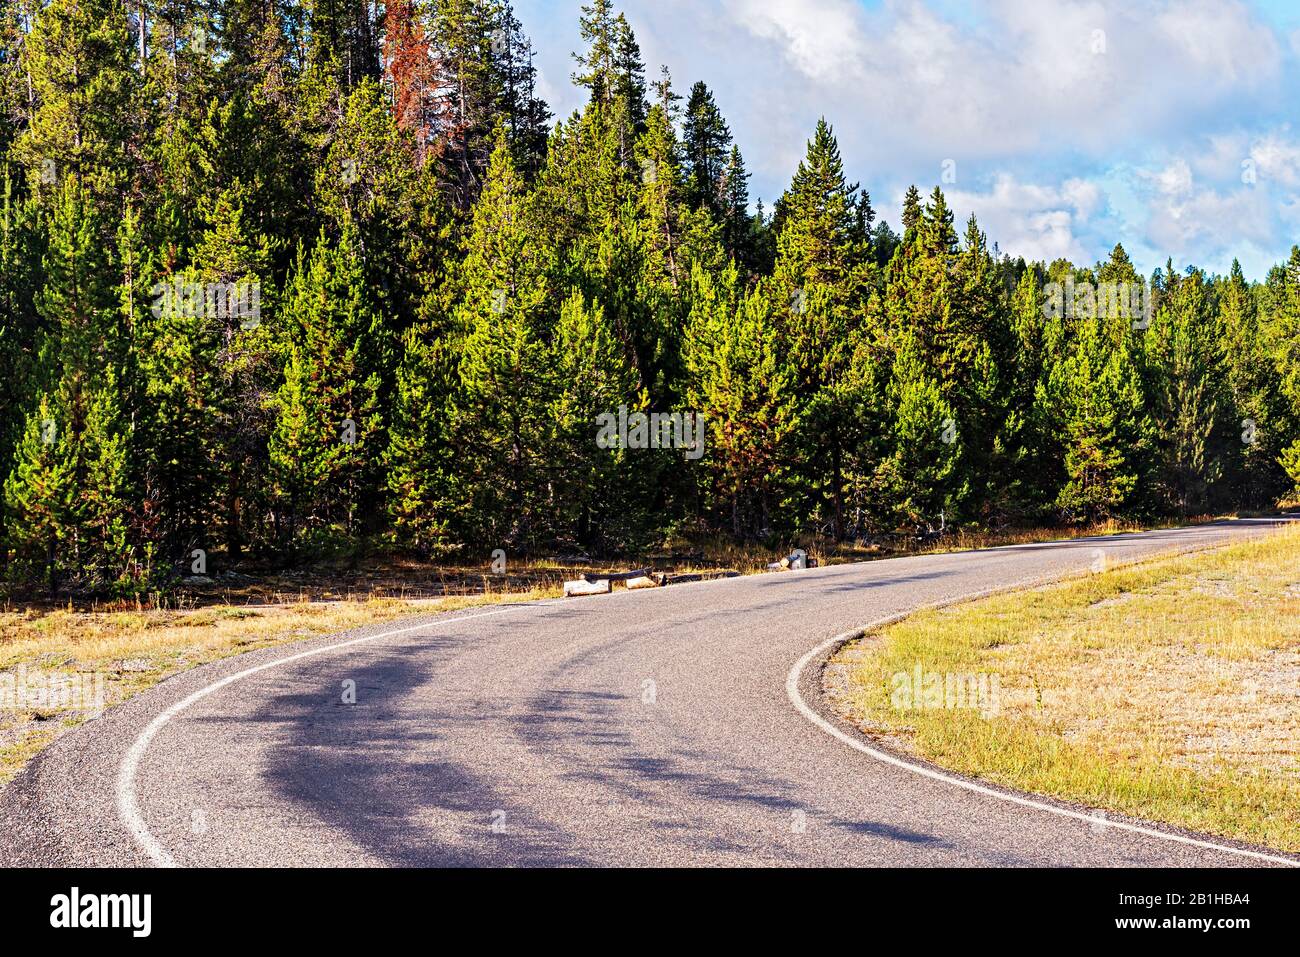 Strada asfaltata stretta che si incurva in una foresta verde. Foto Stock